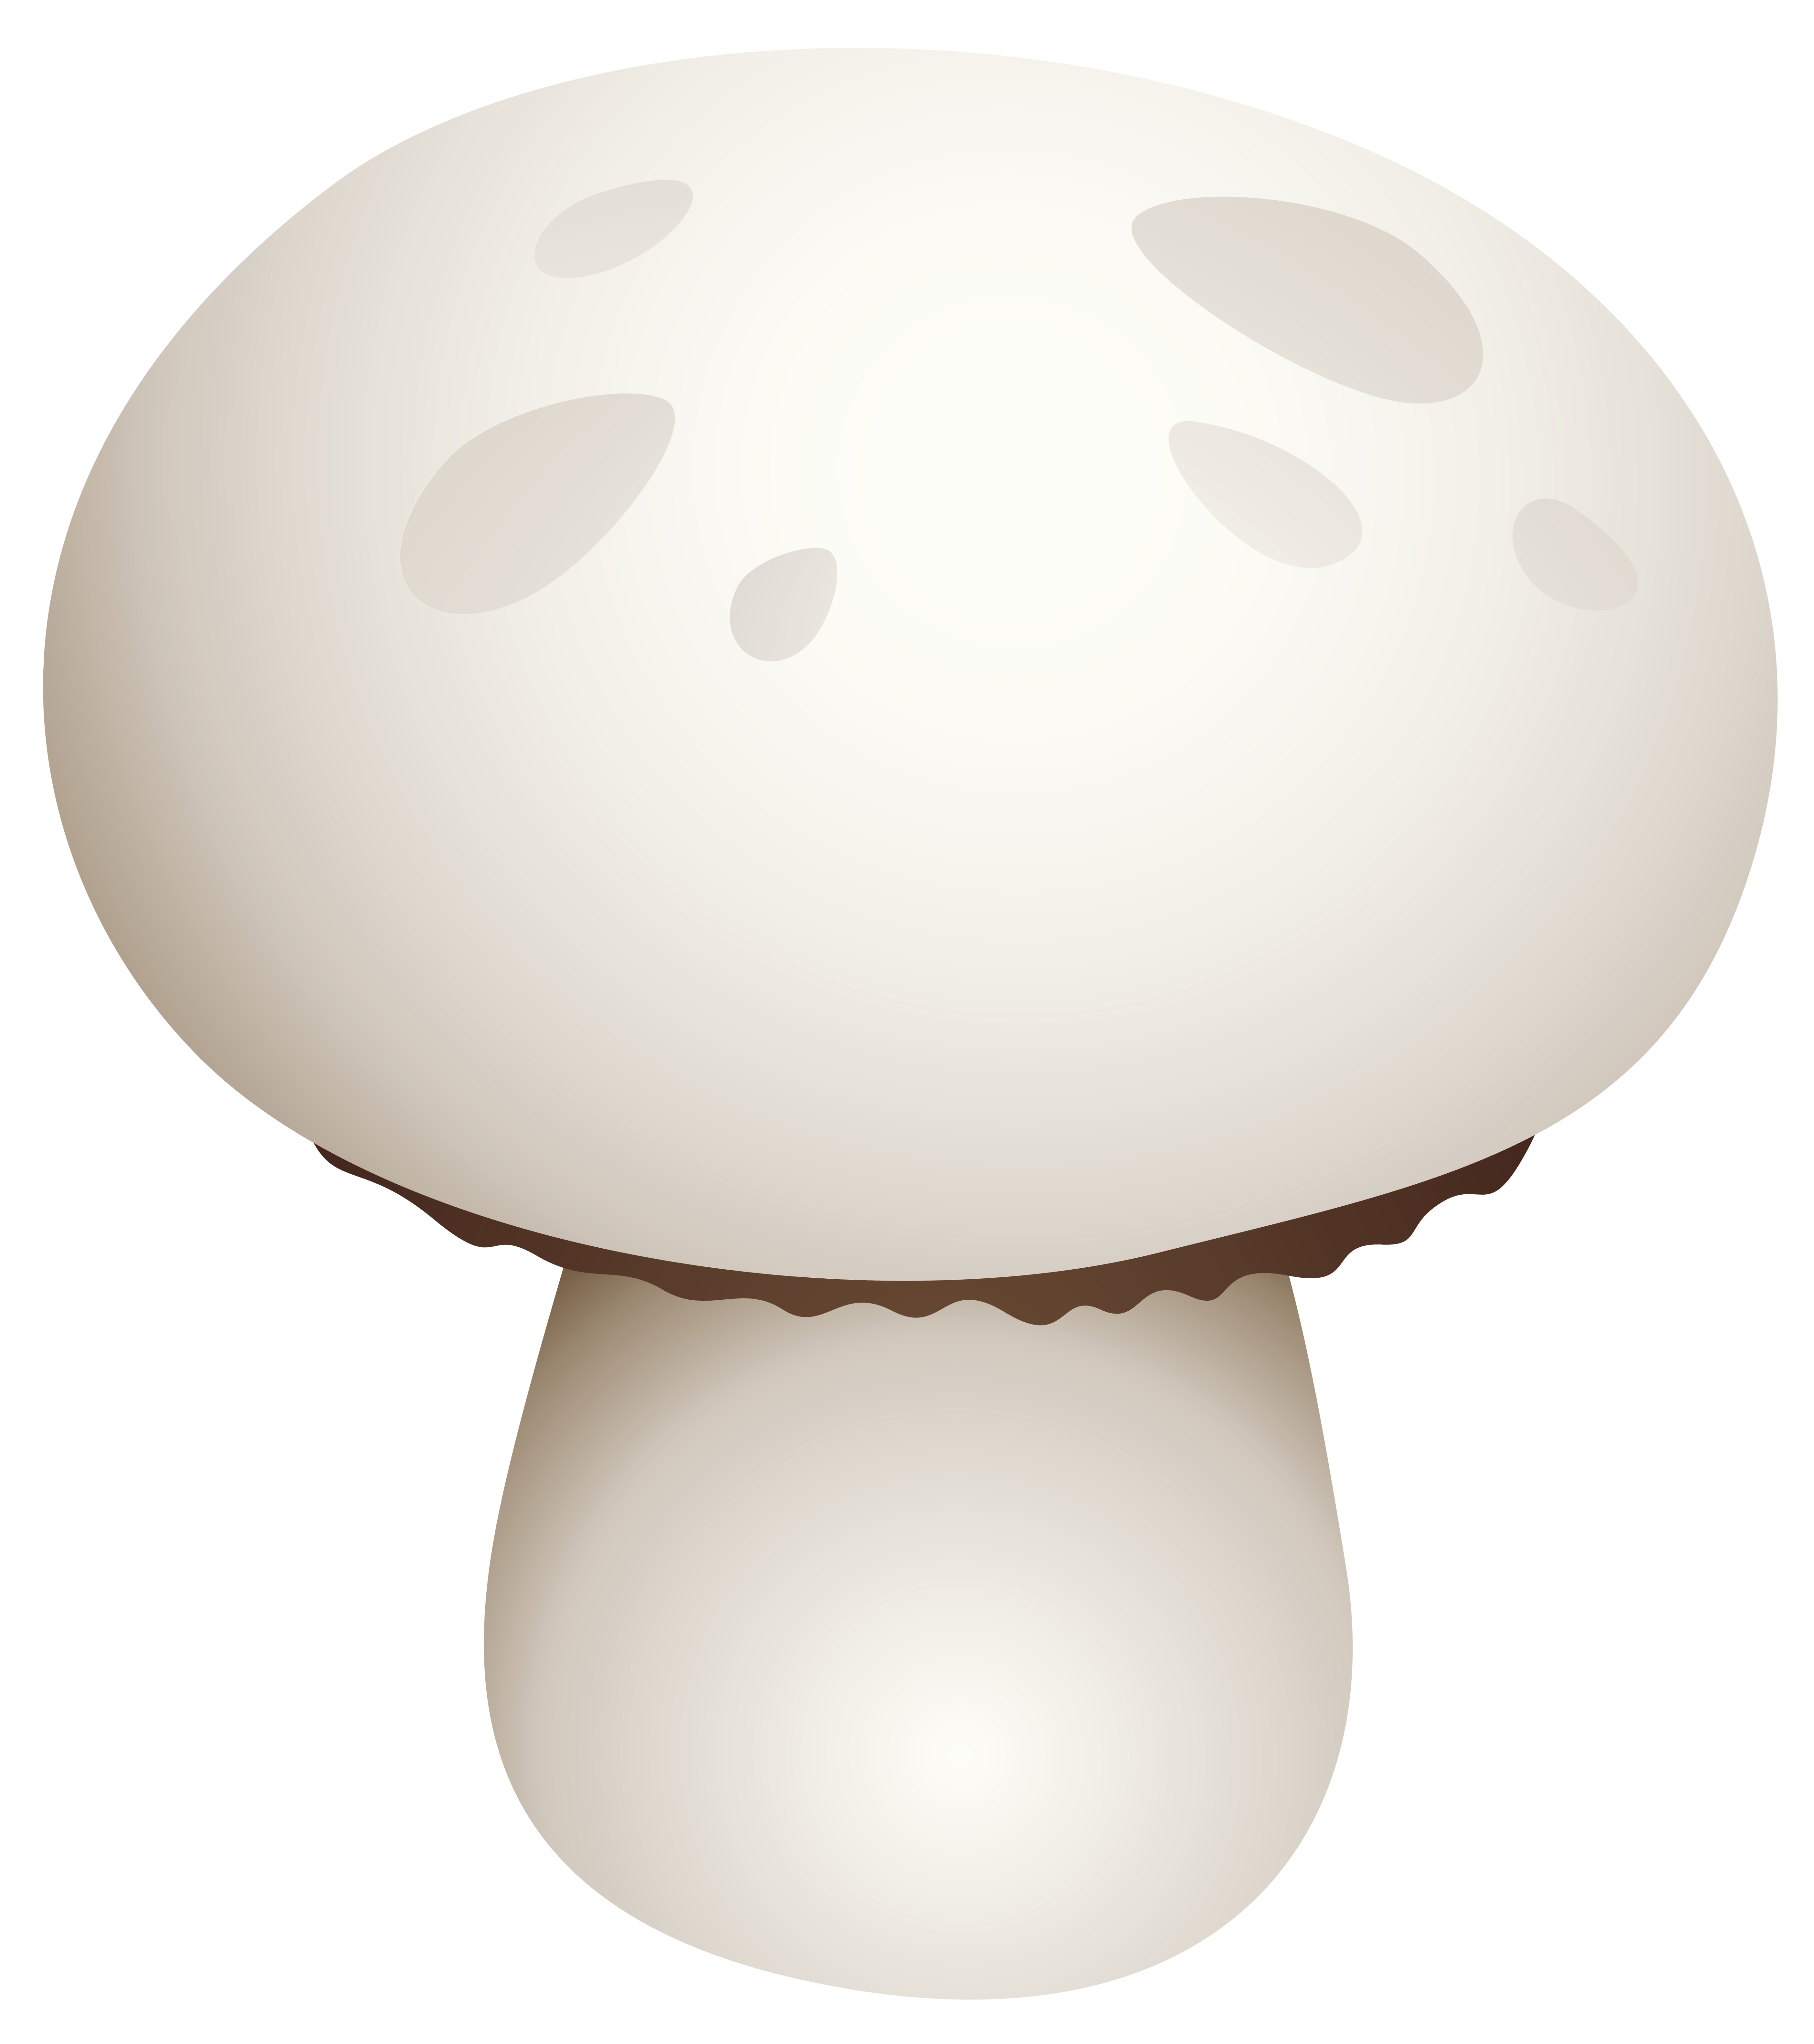 mushroom clipart dark brown